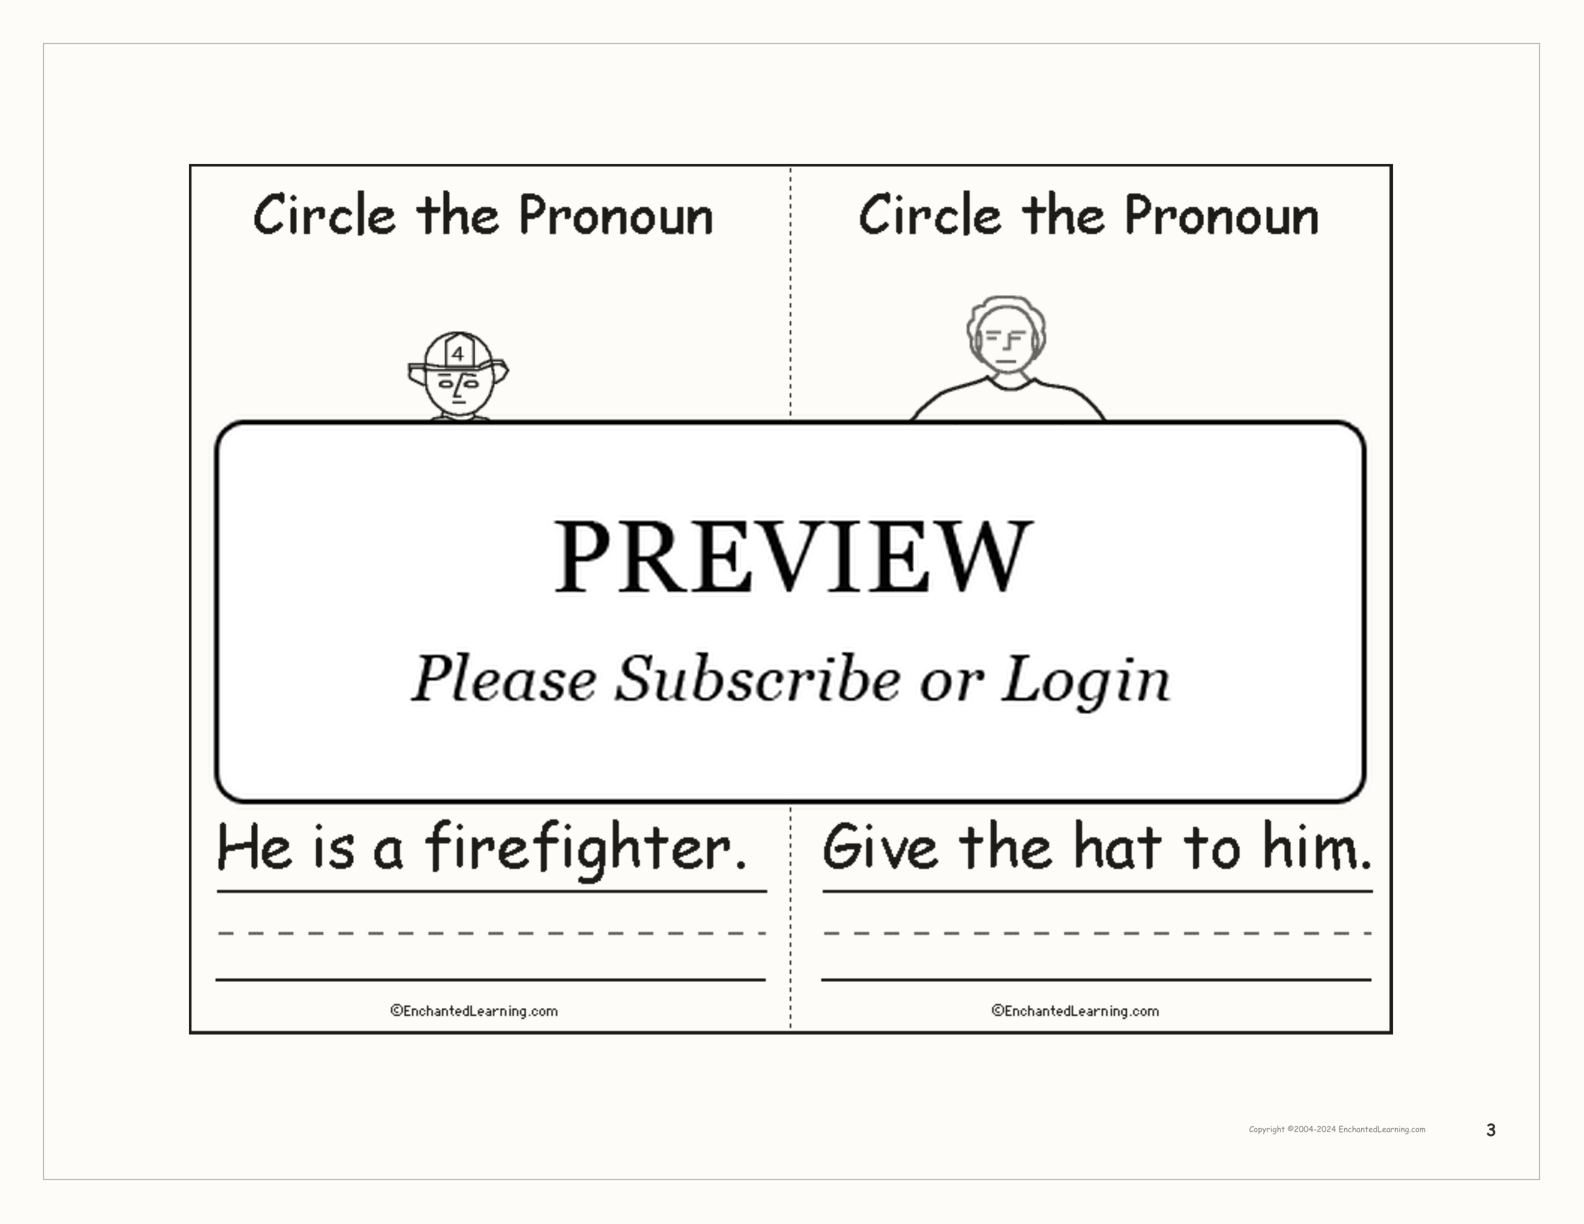 Circle the Pronouns Book interactive printout page 3